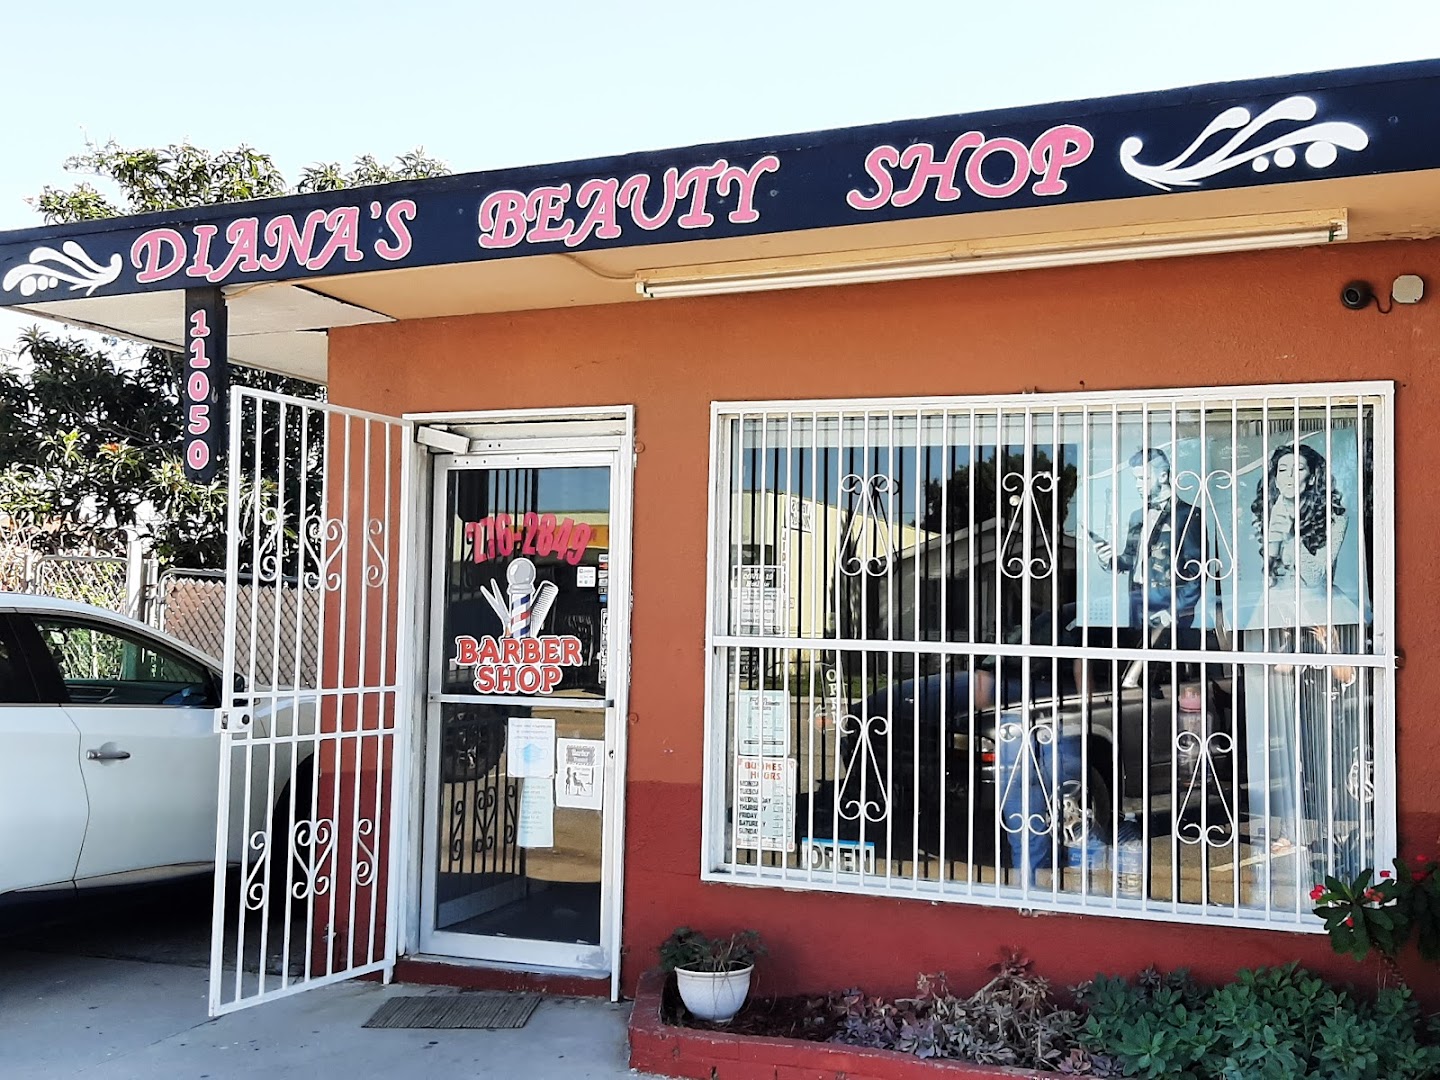 Dianna's Beauty Shop